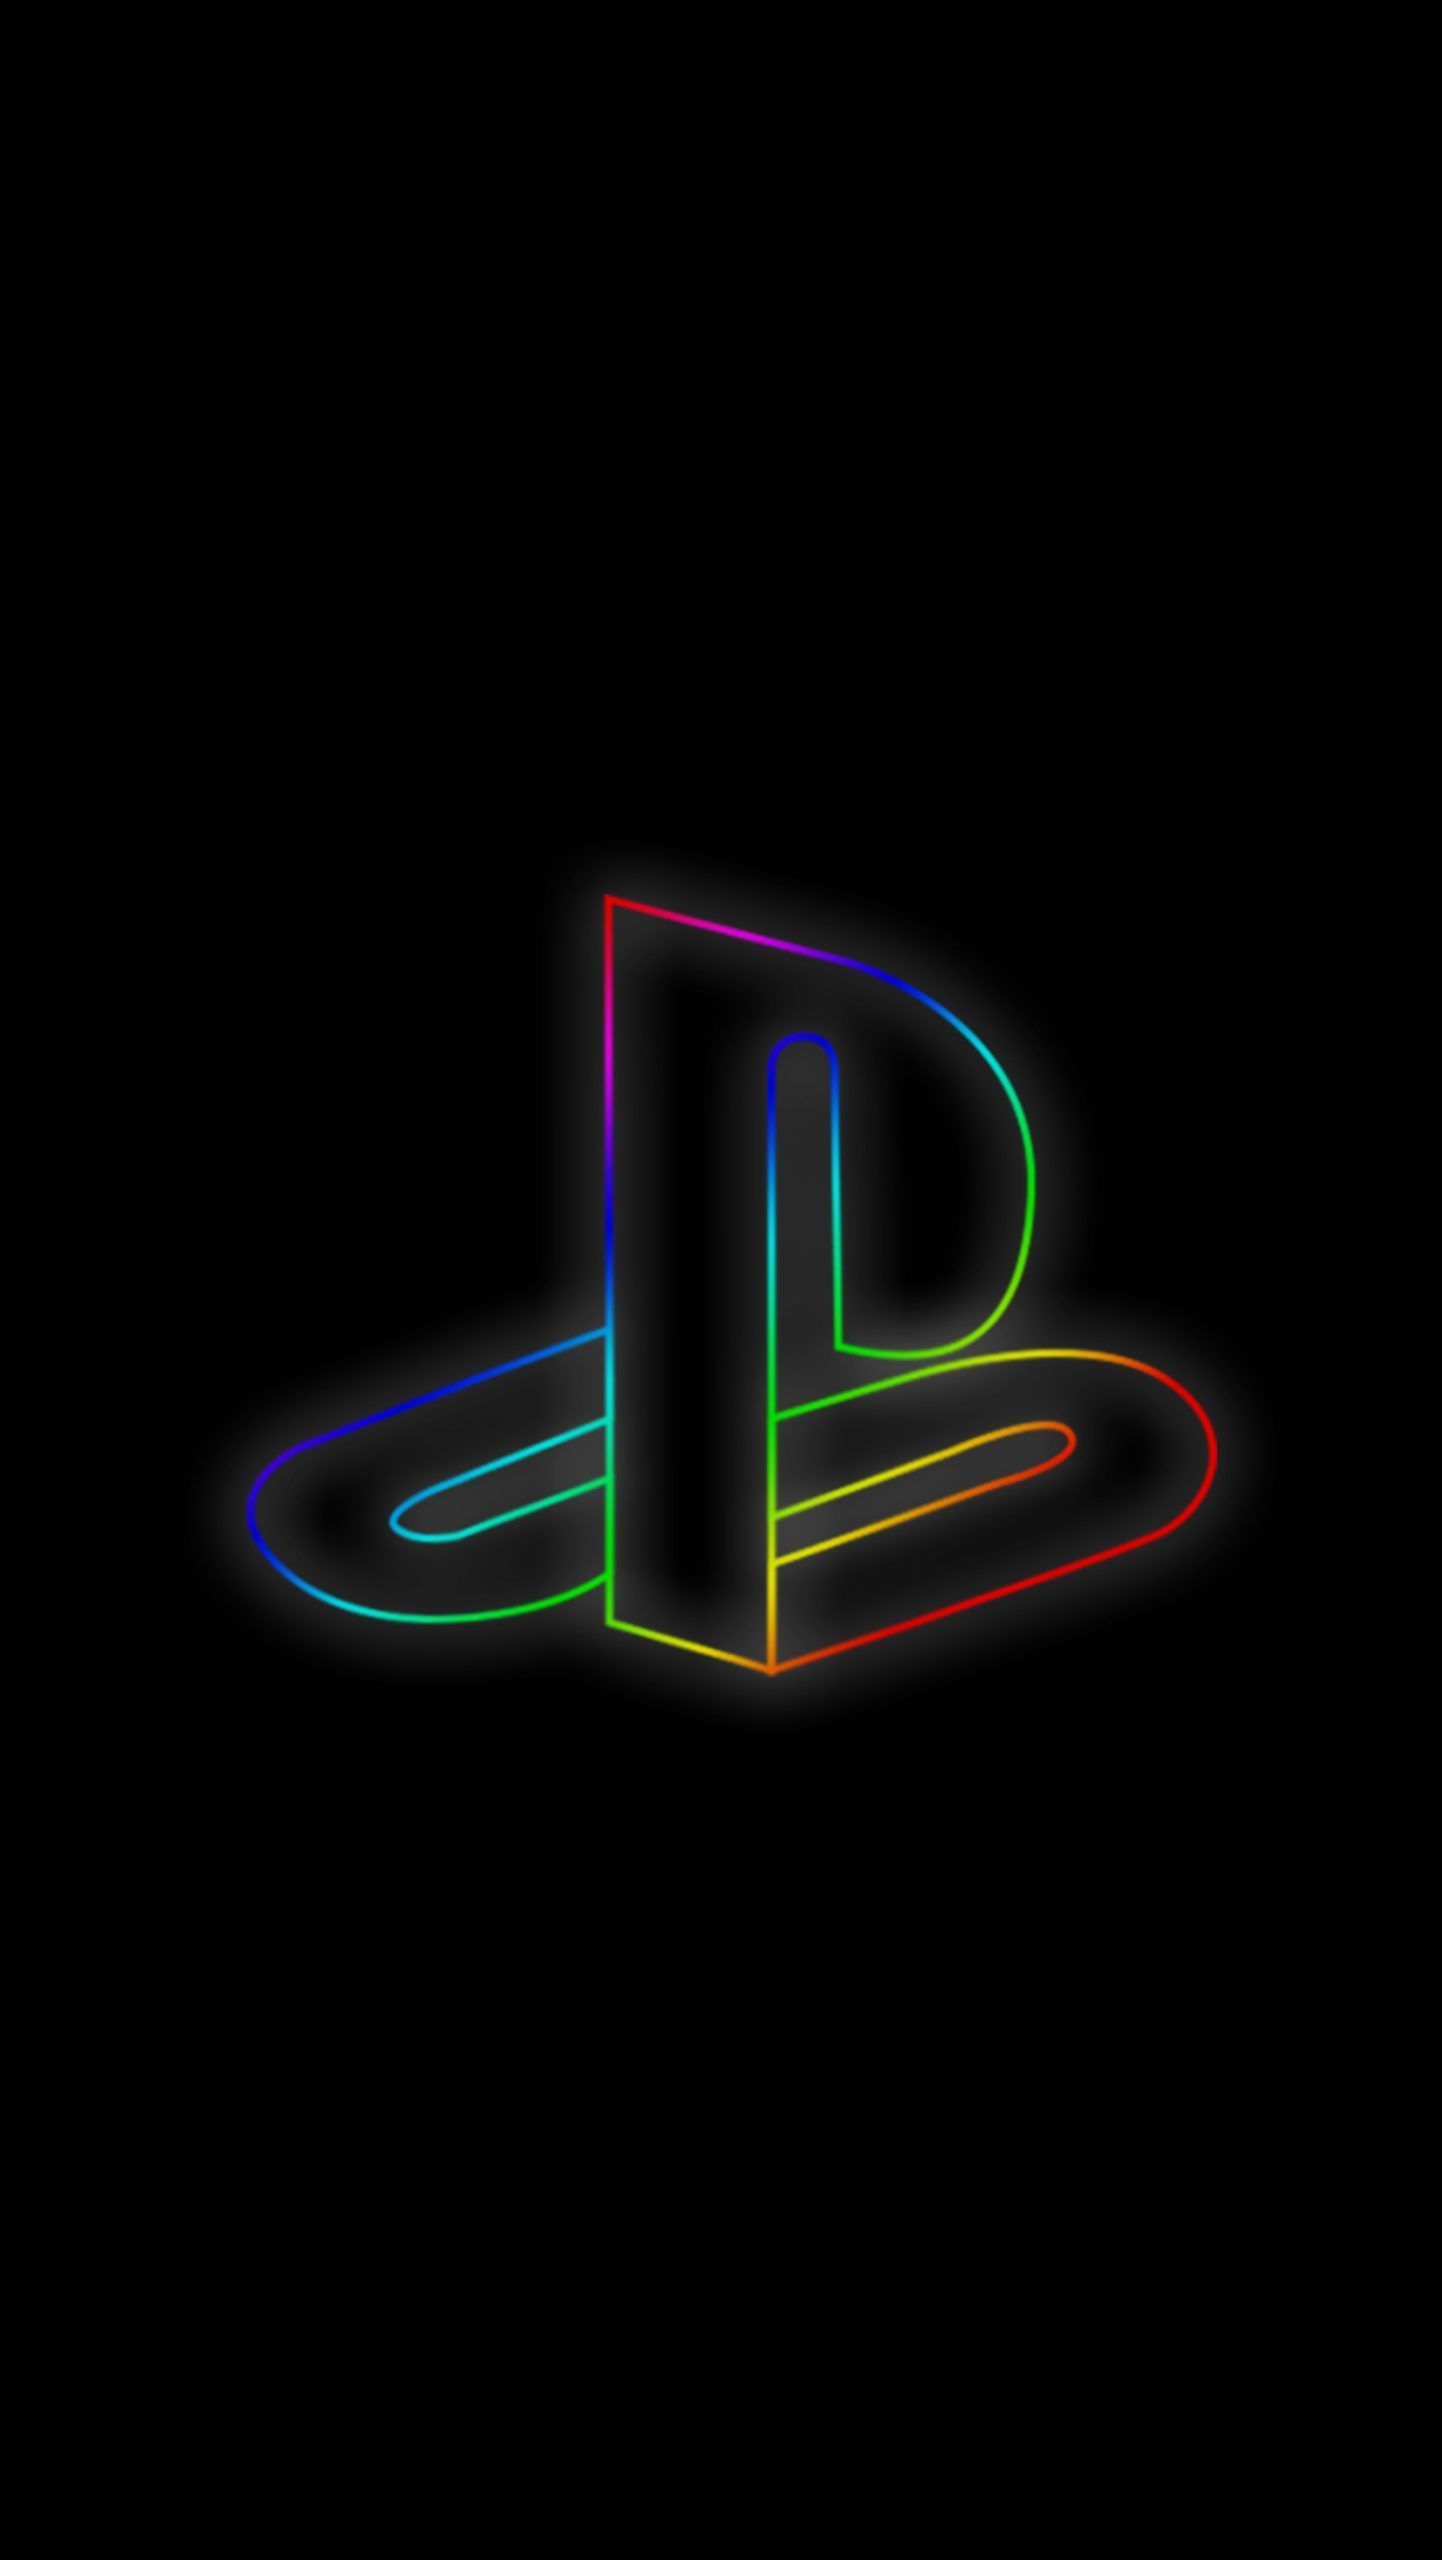 Neon Playstation Background - #Background #neon #PlayStation #playstationbackground em 2020. Papéis de parede de jogos, Papel de parede games, Papel de parede android